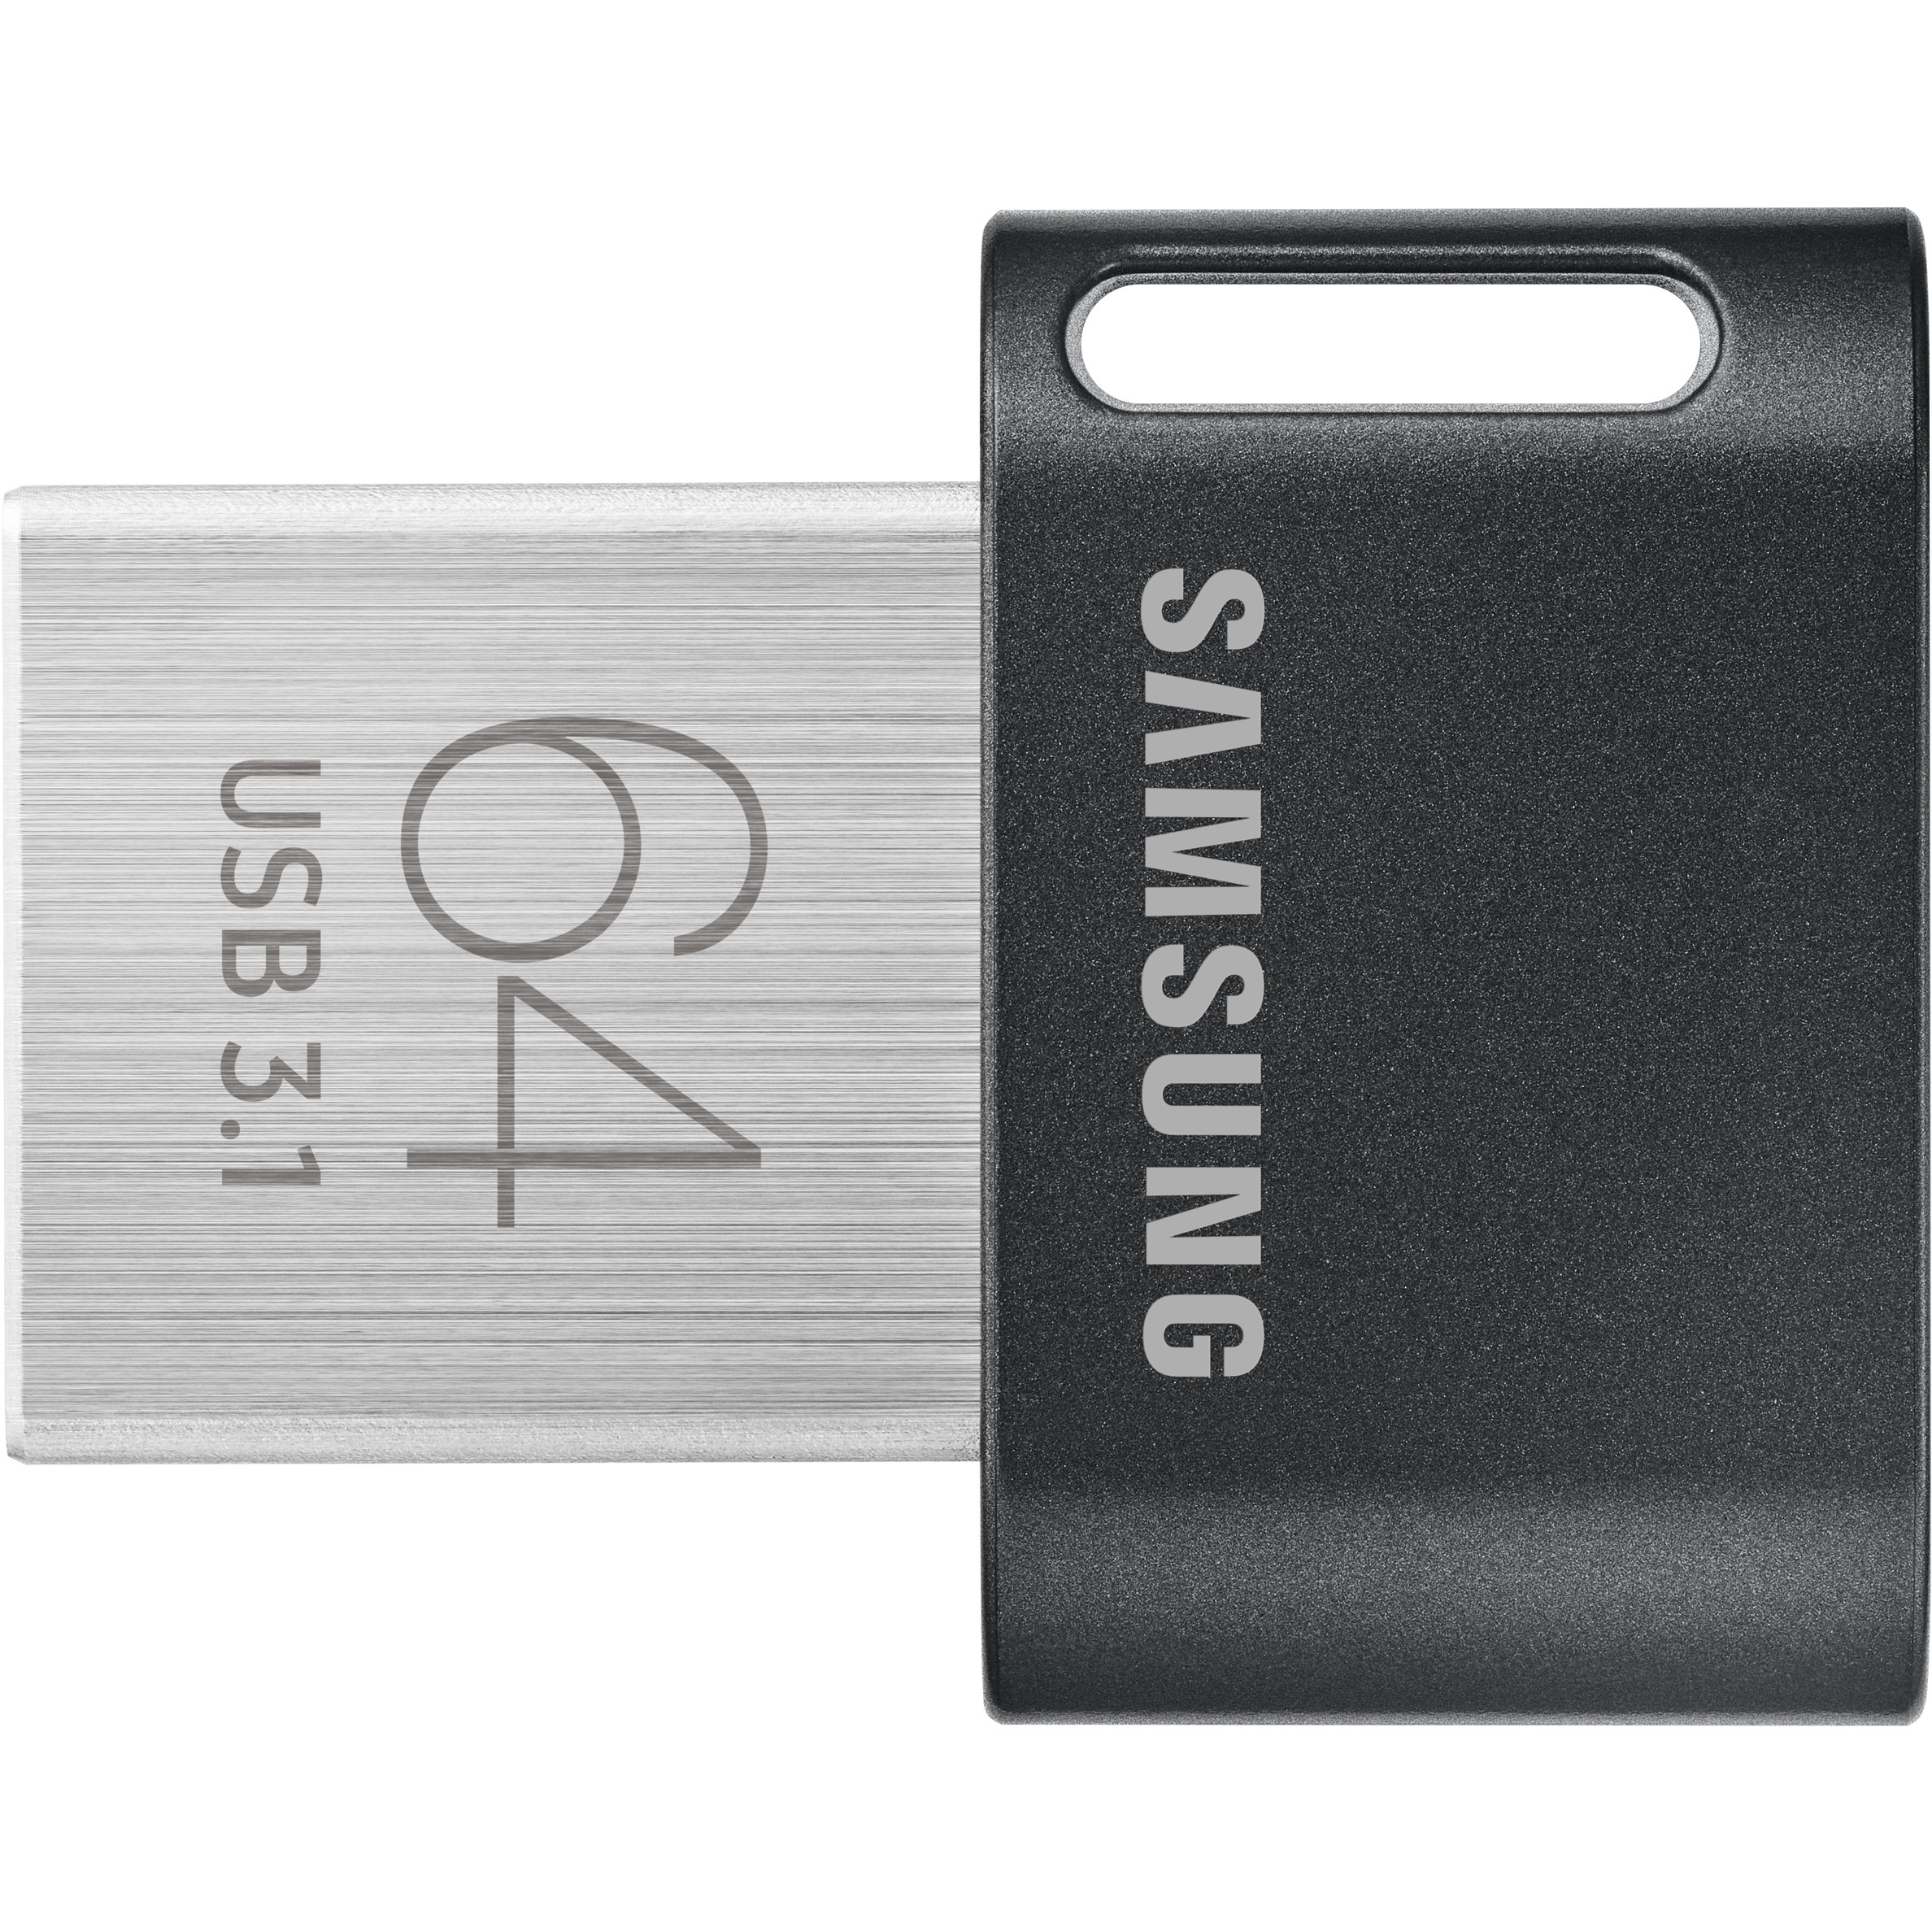 Samsung MUF-64AB USB flash drive